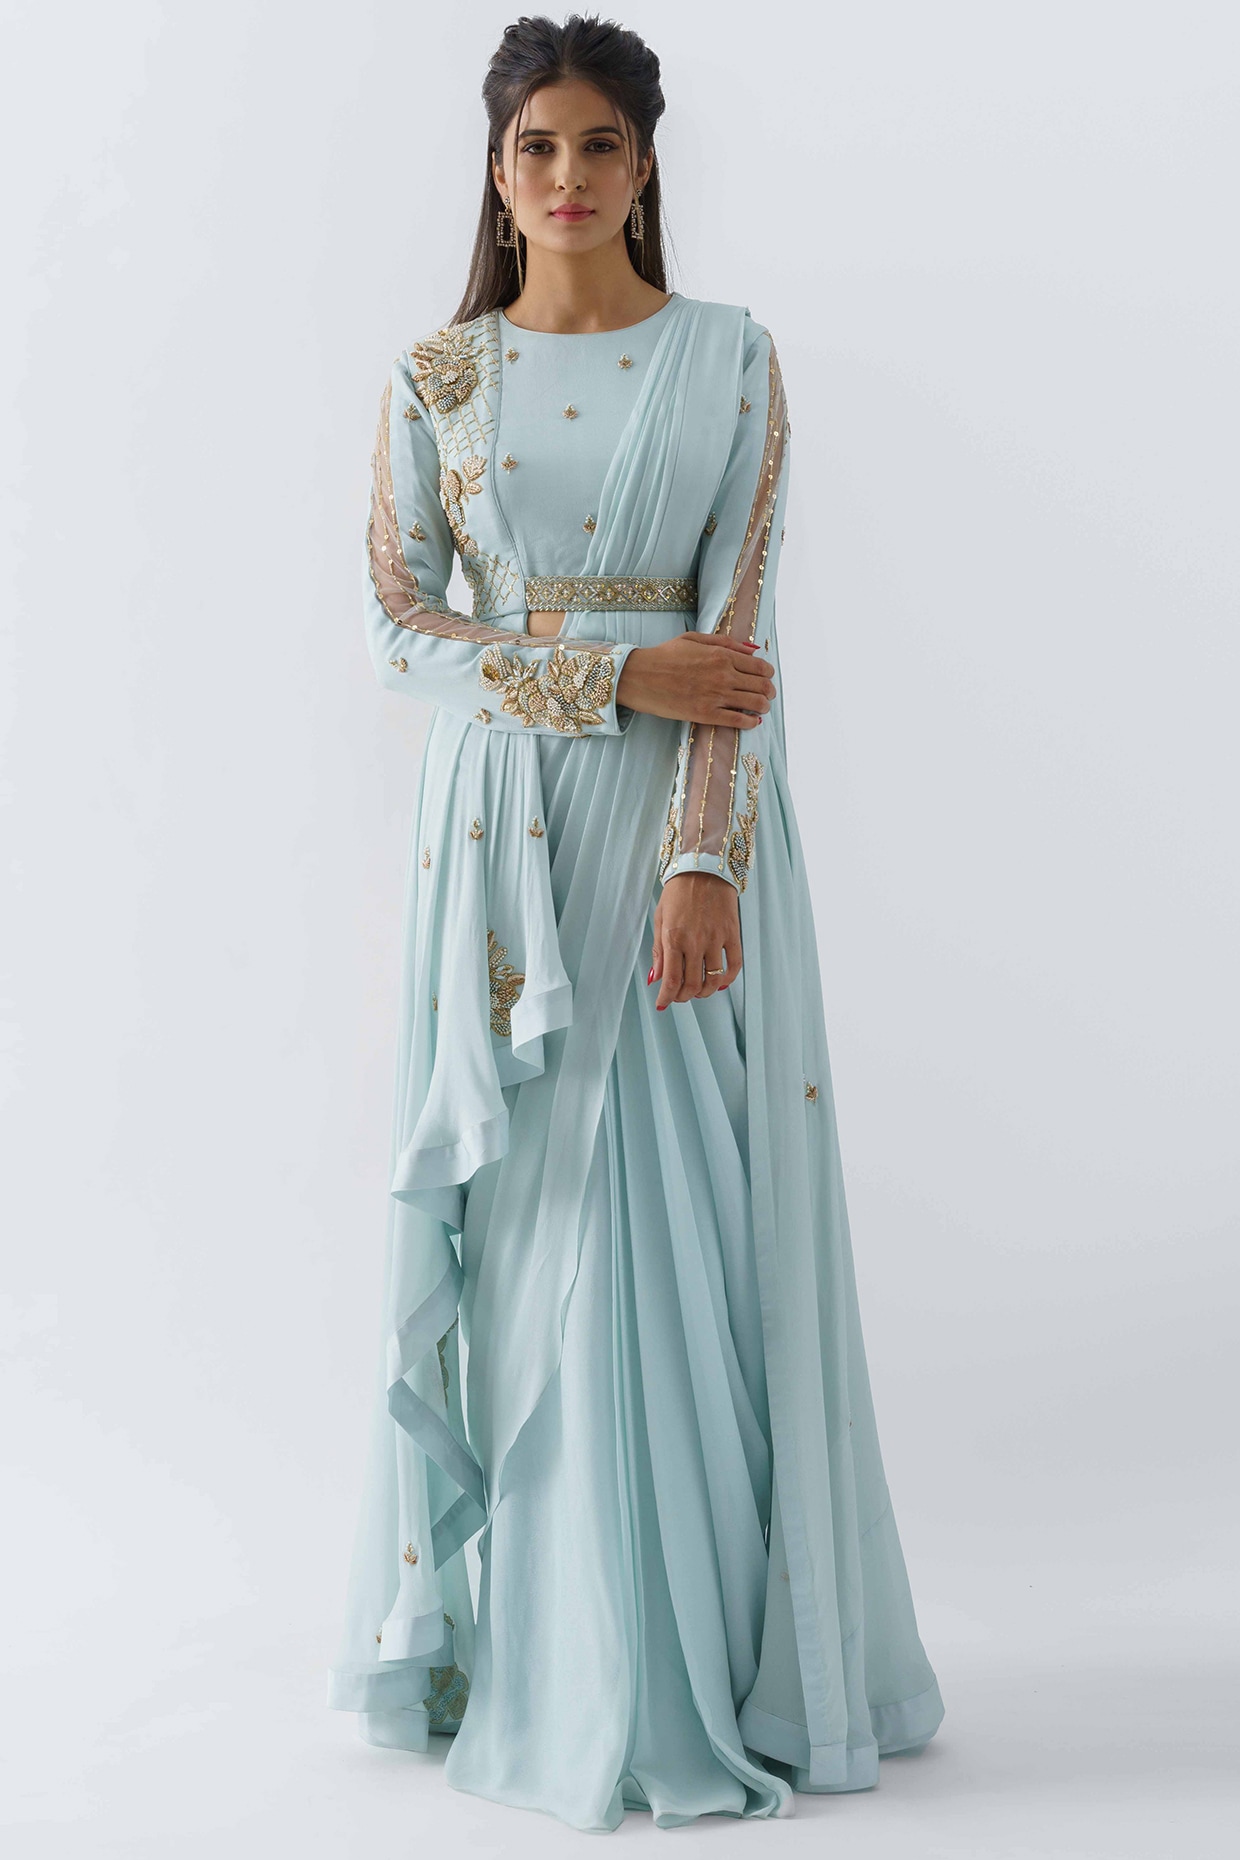 Wear Pre-stitched Sarees With Skirt - Shivani Blog